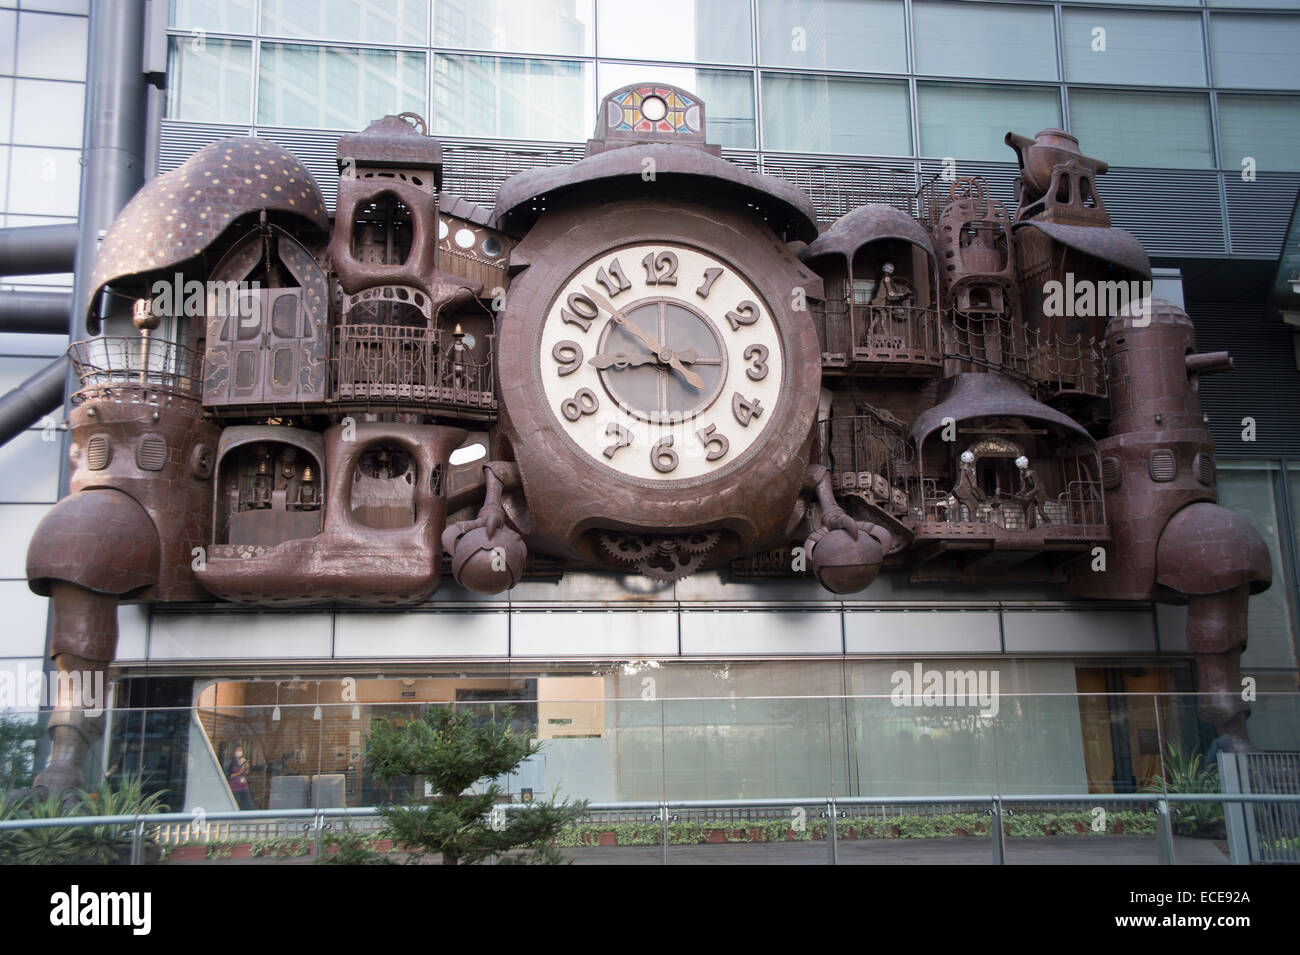 Miyazaki Steam-Punk Clock at Nippon TV Shiodome, Tokyo, Japan. Stock Photo